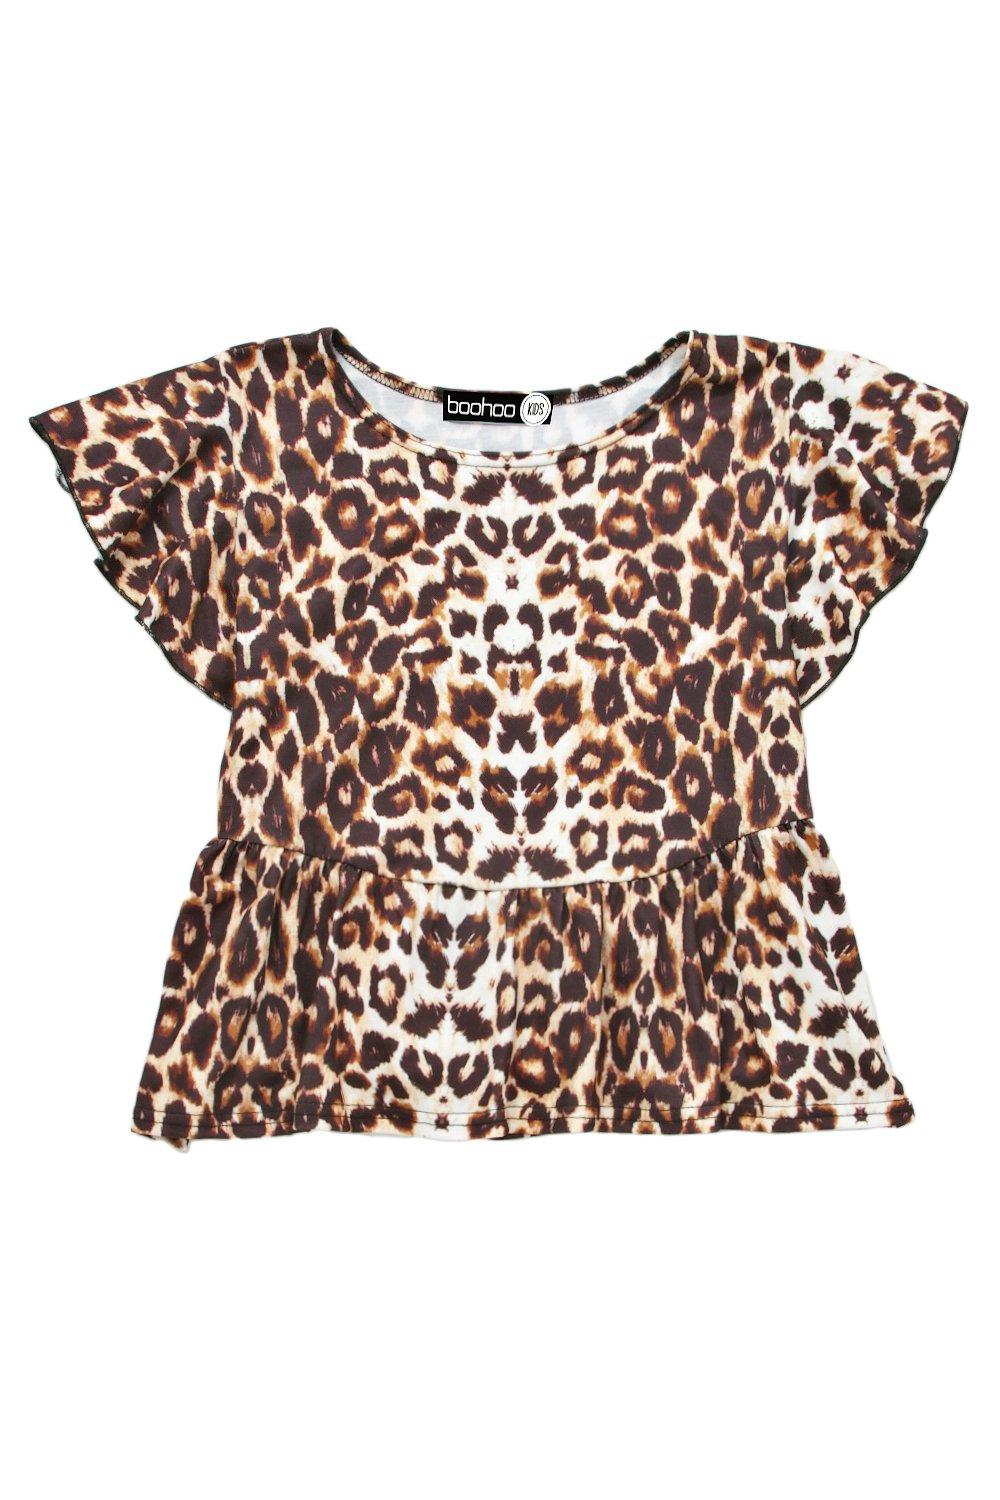 Girls Ruffle Leopard Print Top